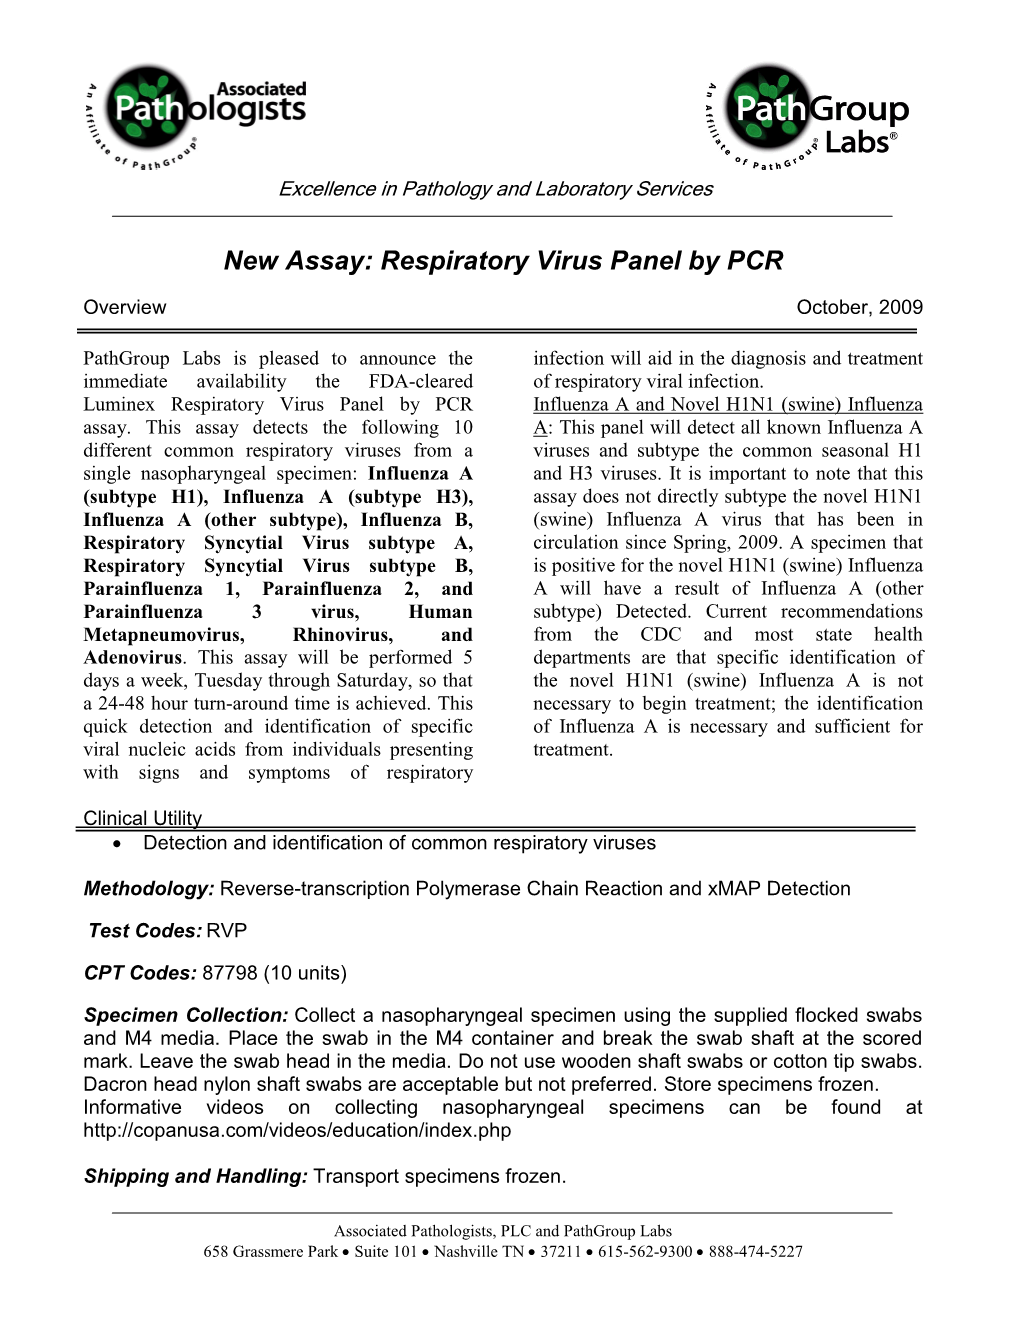 Respiratory Virus Panel by PCR